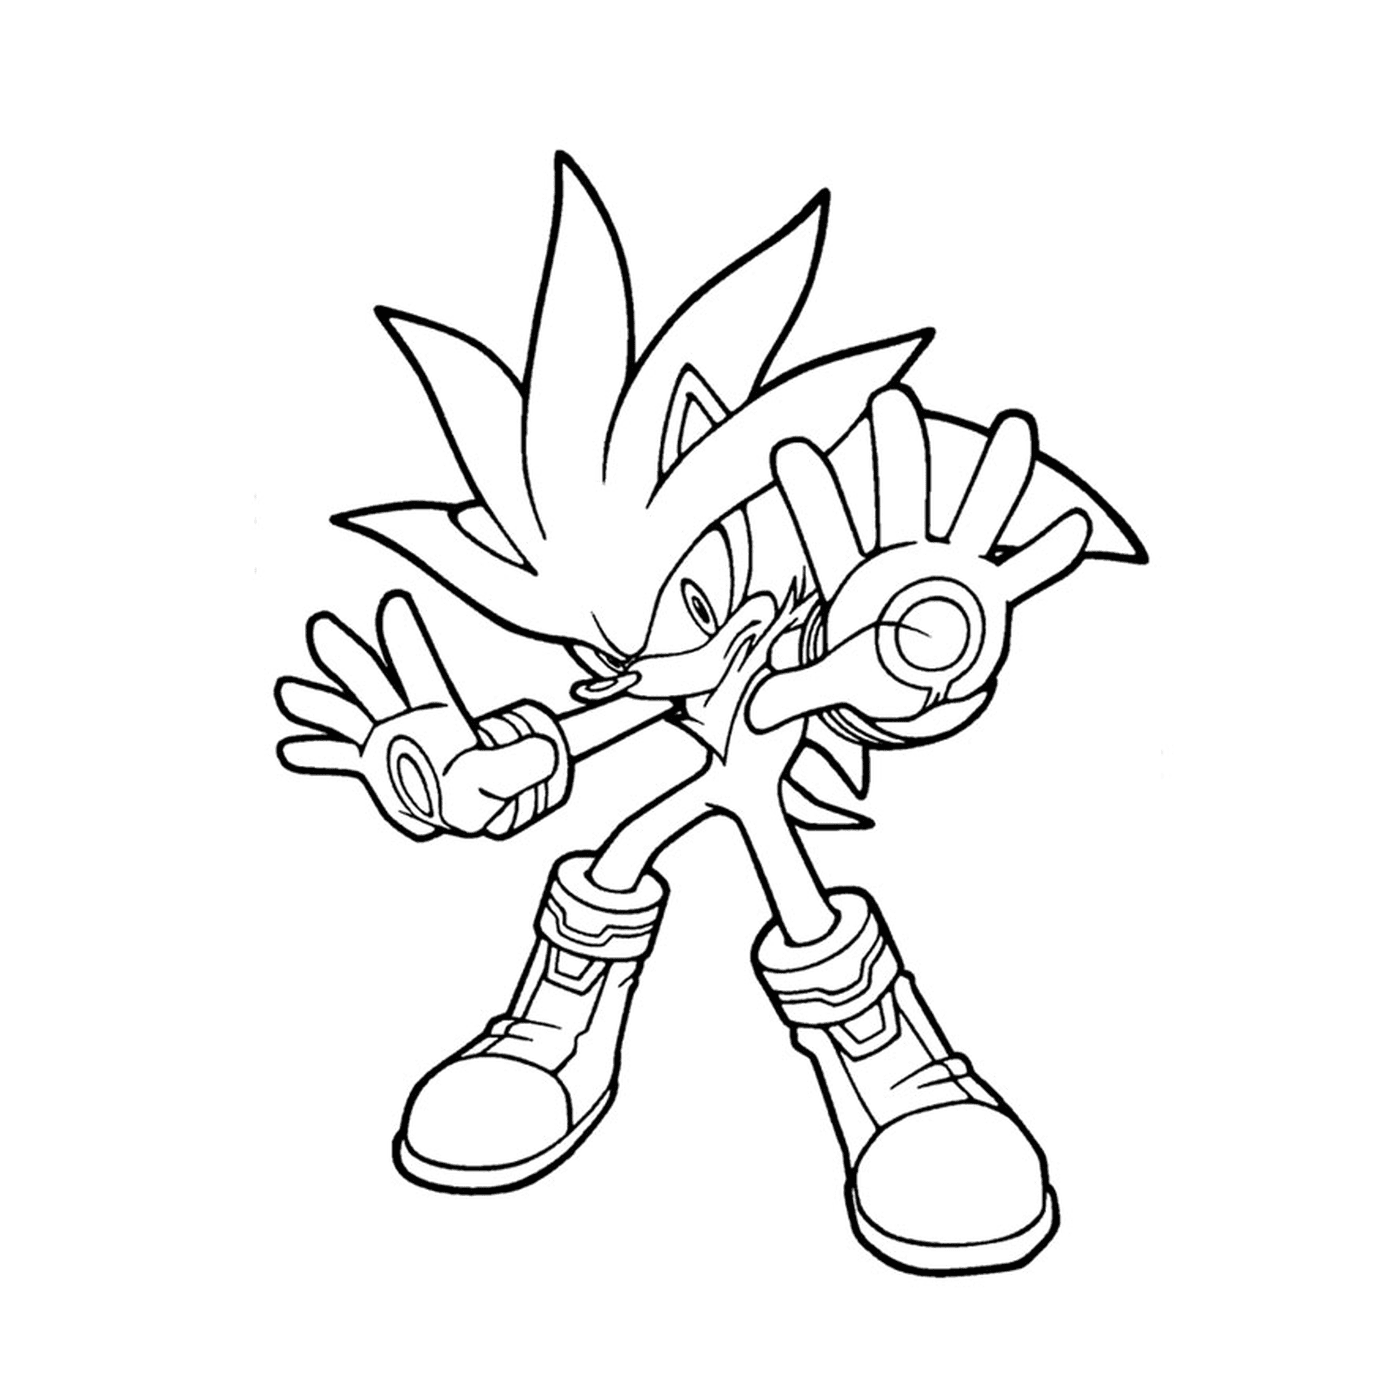  Sonic en la serie animada Sonic X 